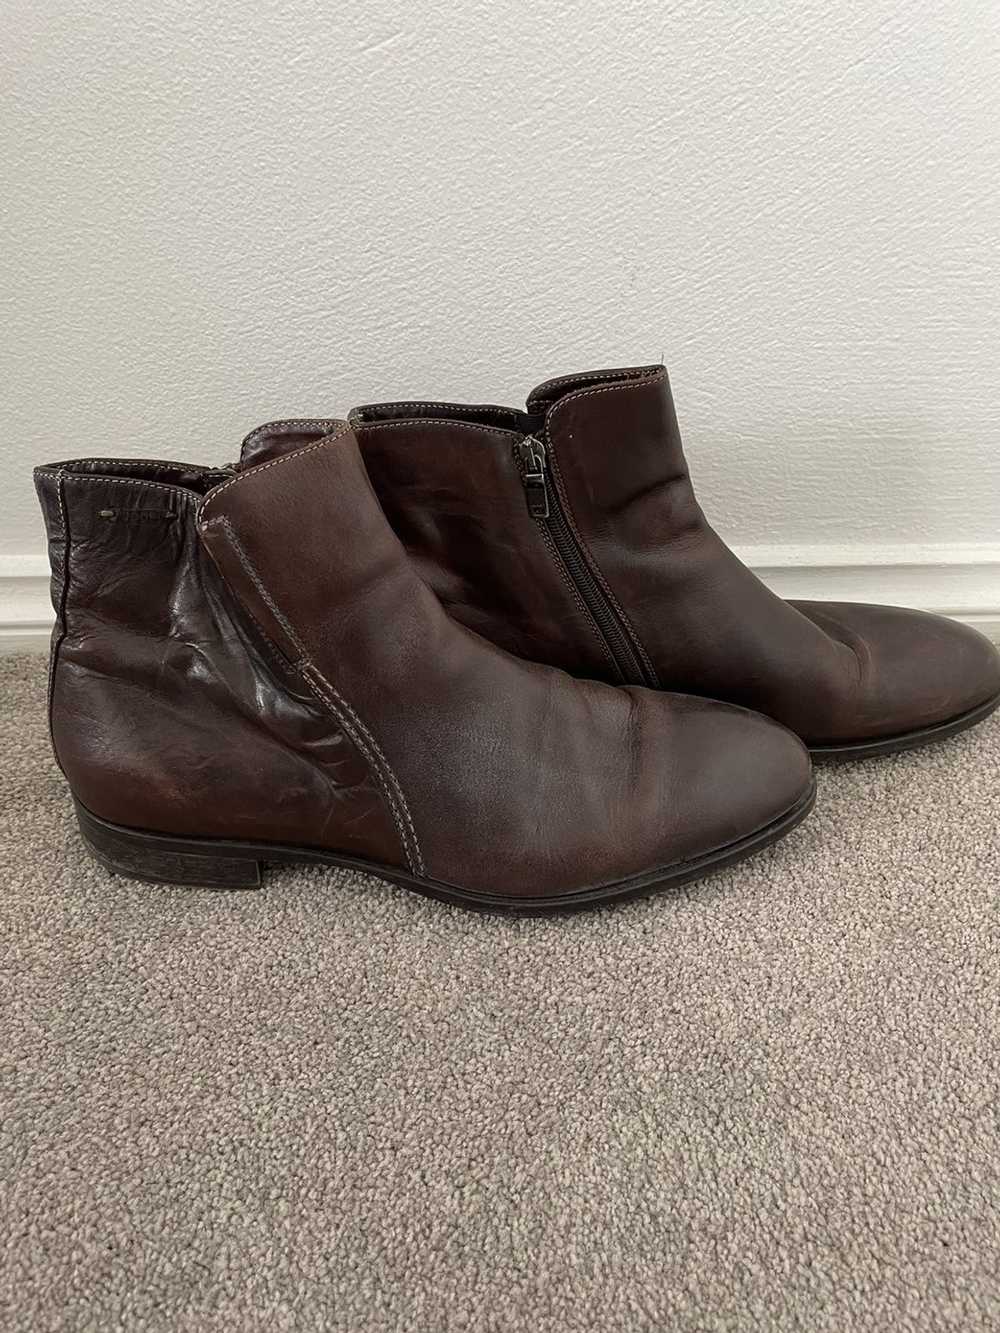 Joop! Joop brown leather side zip boots size 44 - image 2